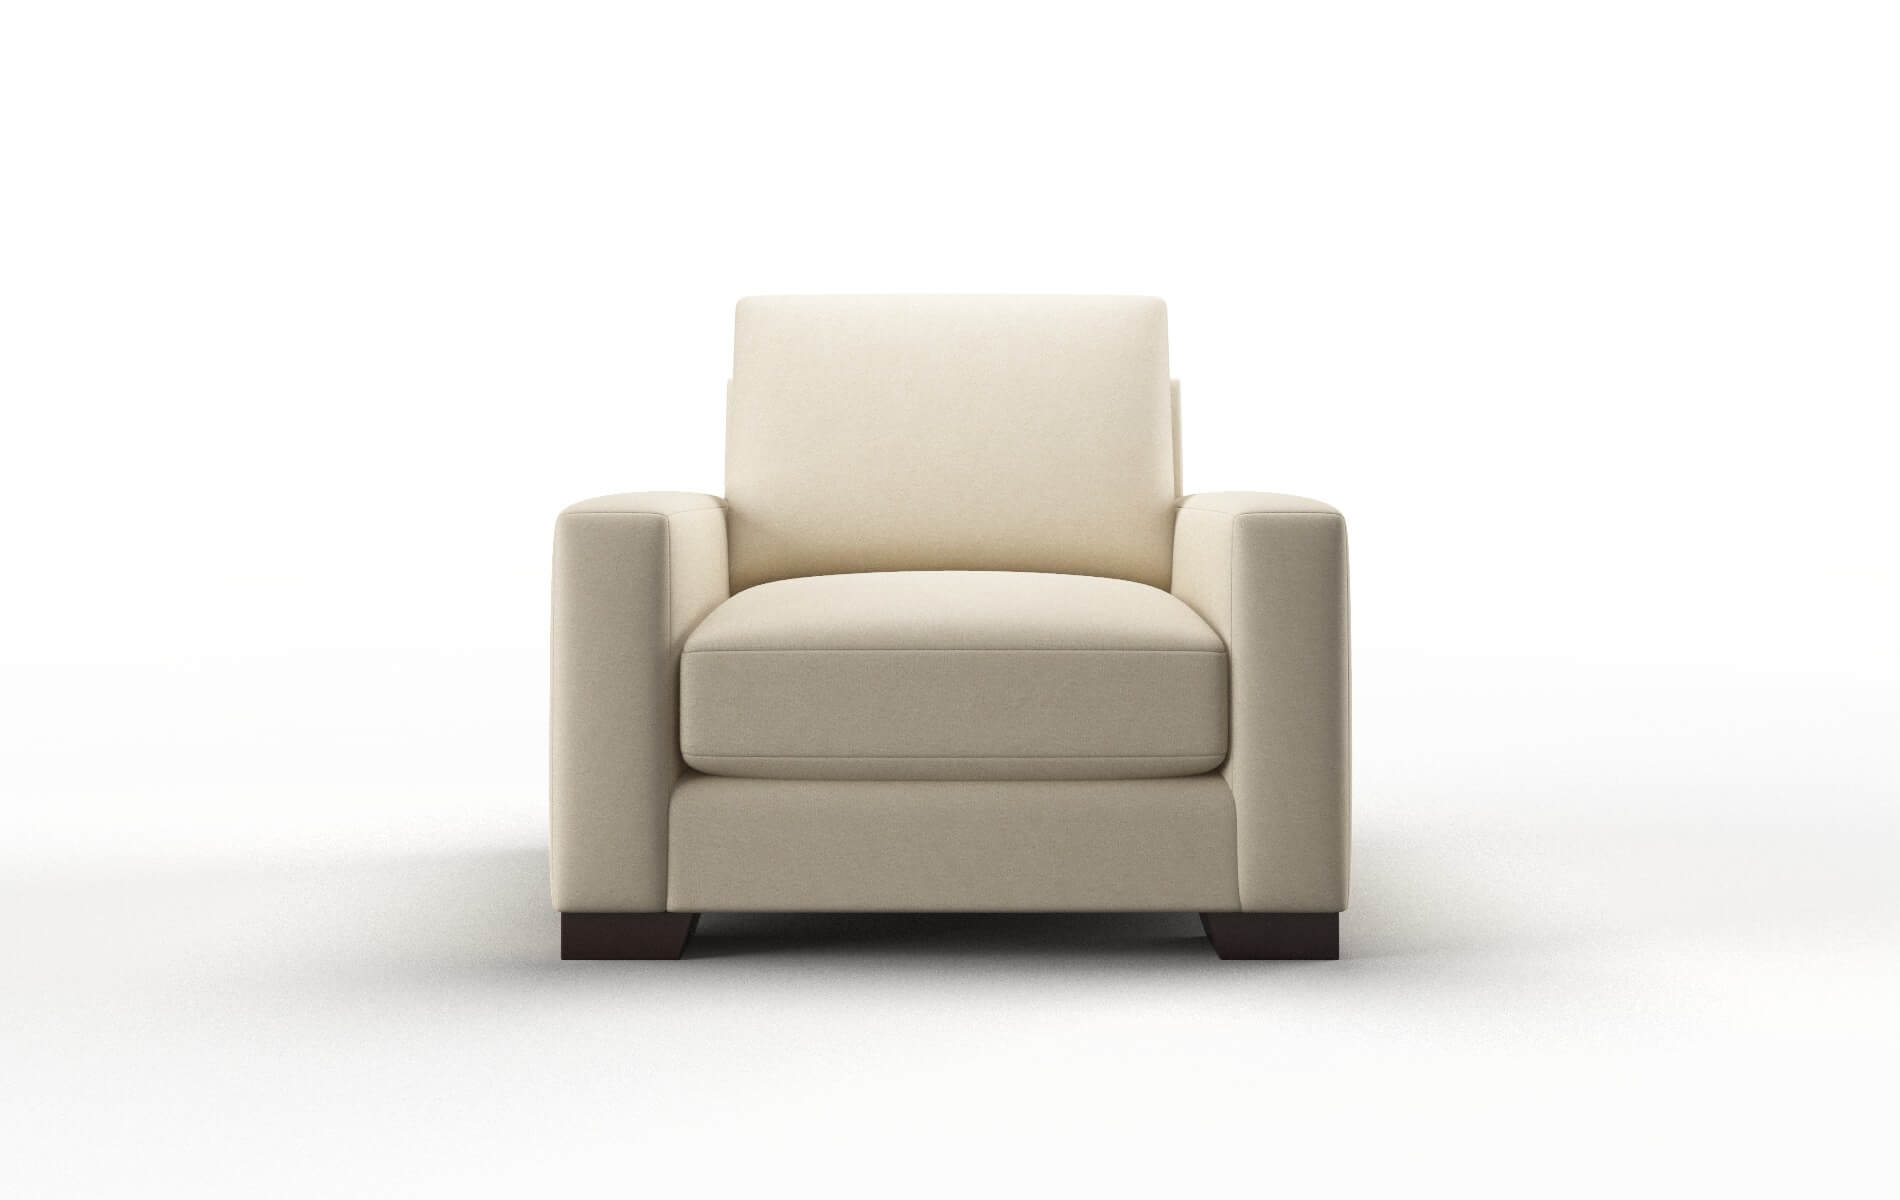 London Dream_d Almond Chair espresso legs 1